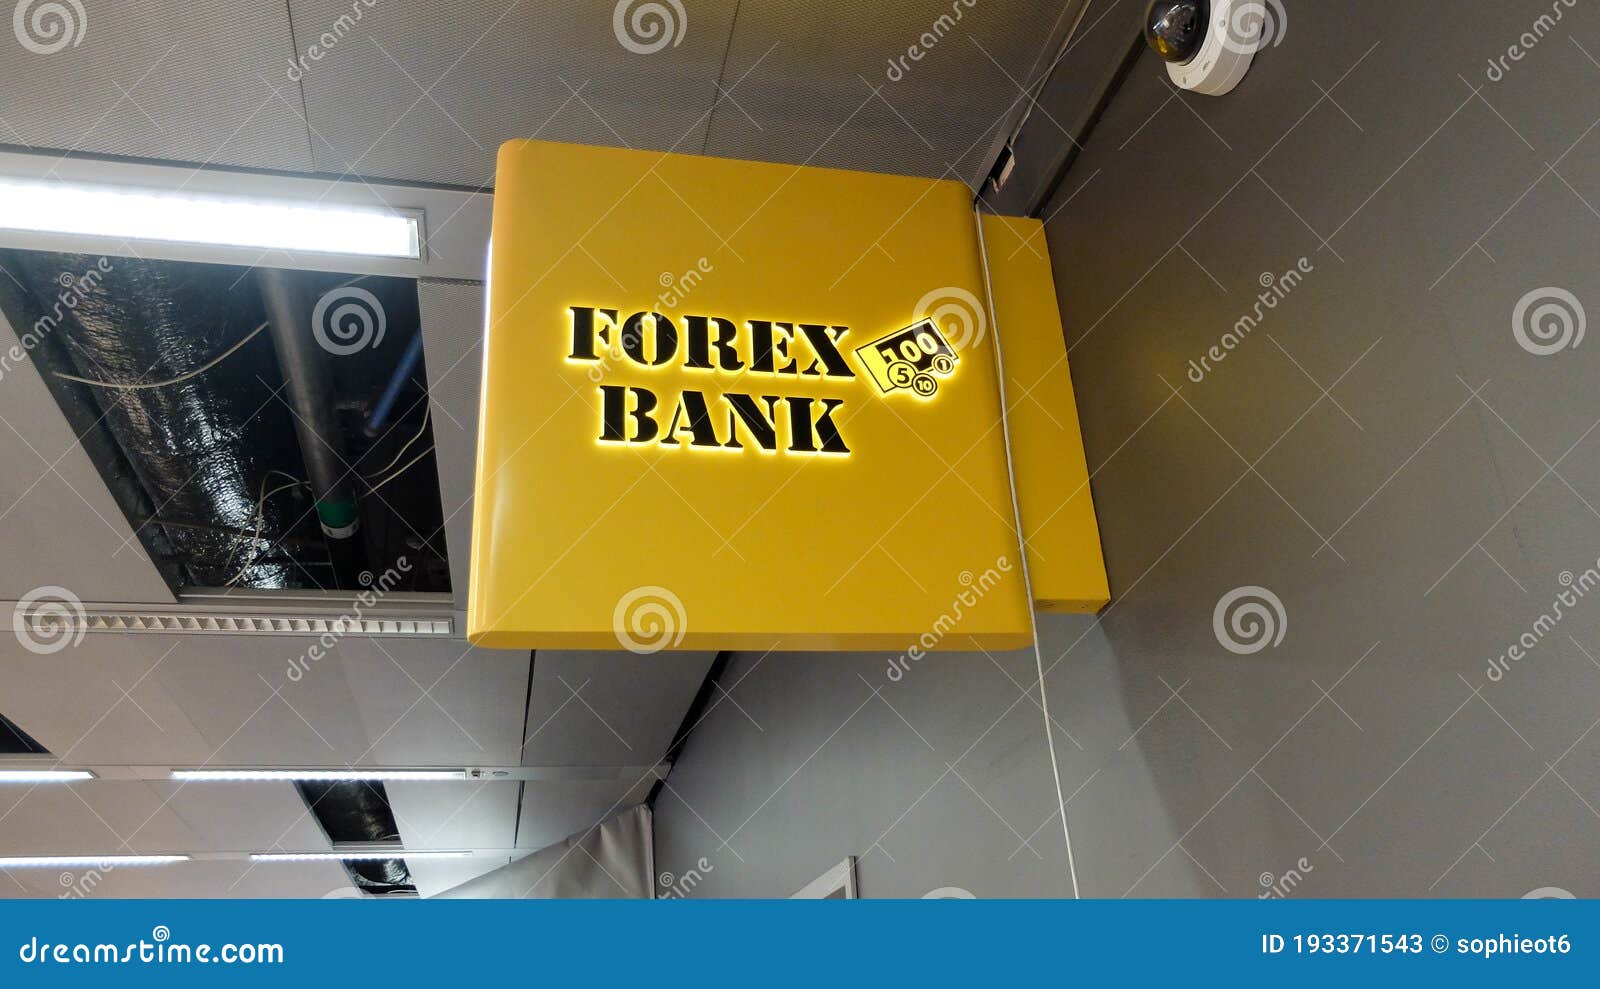 forex office stockholm